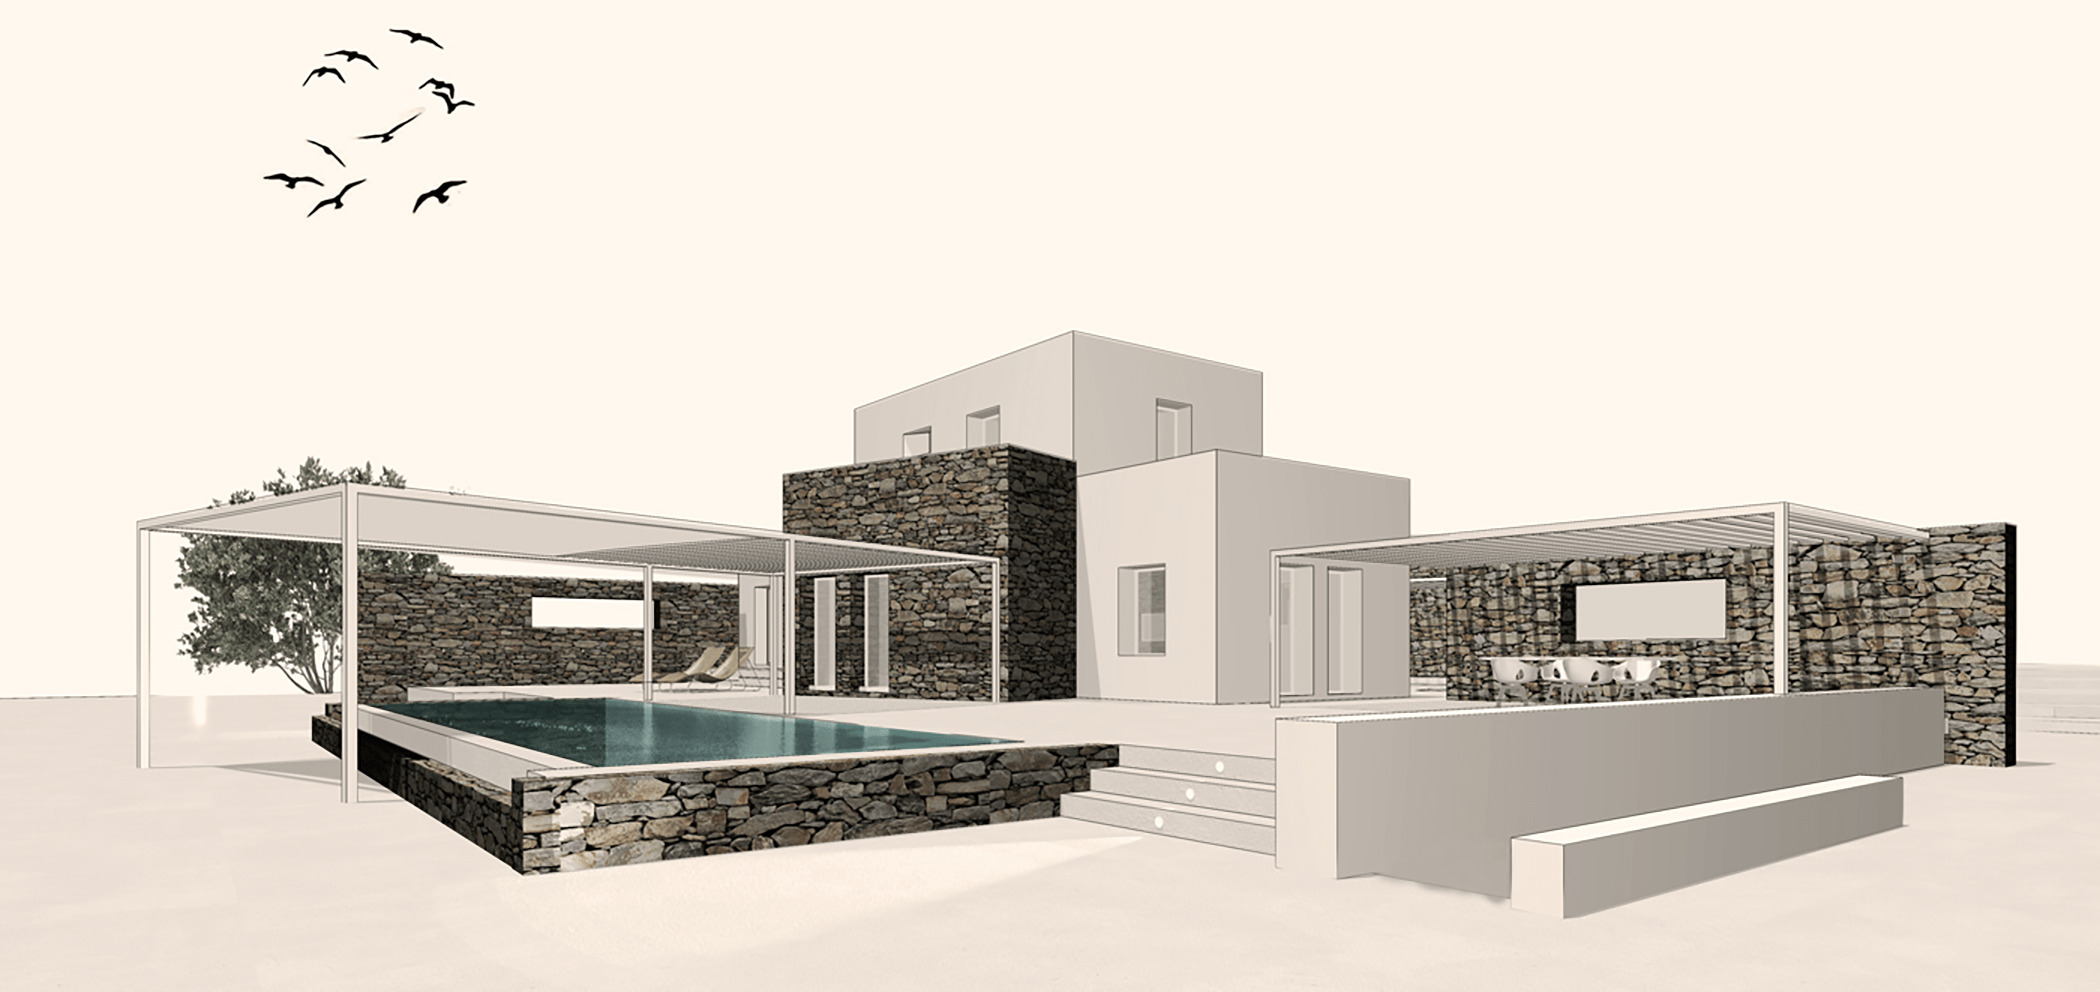 Evripiotis Architects--X House, Paros Island